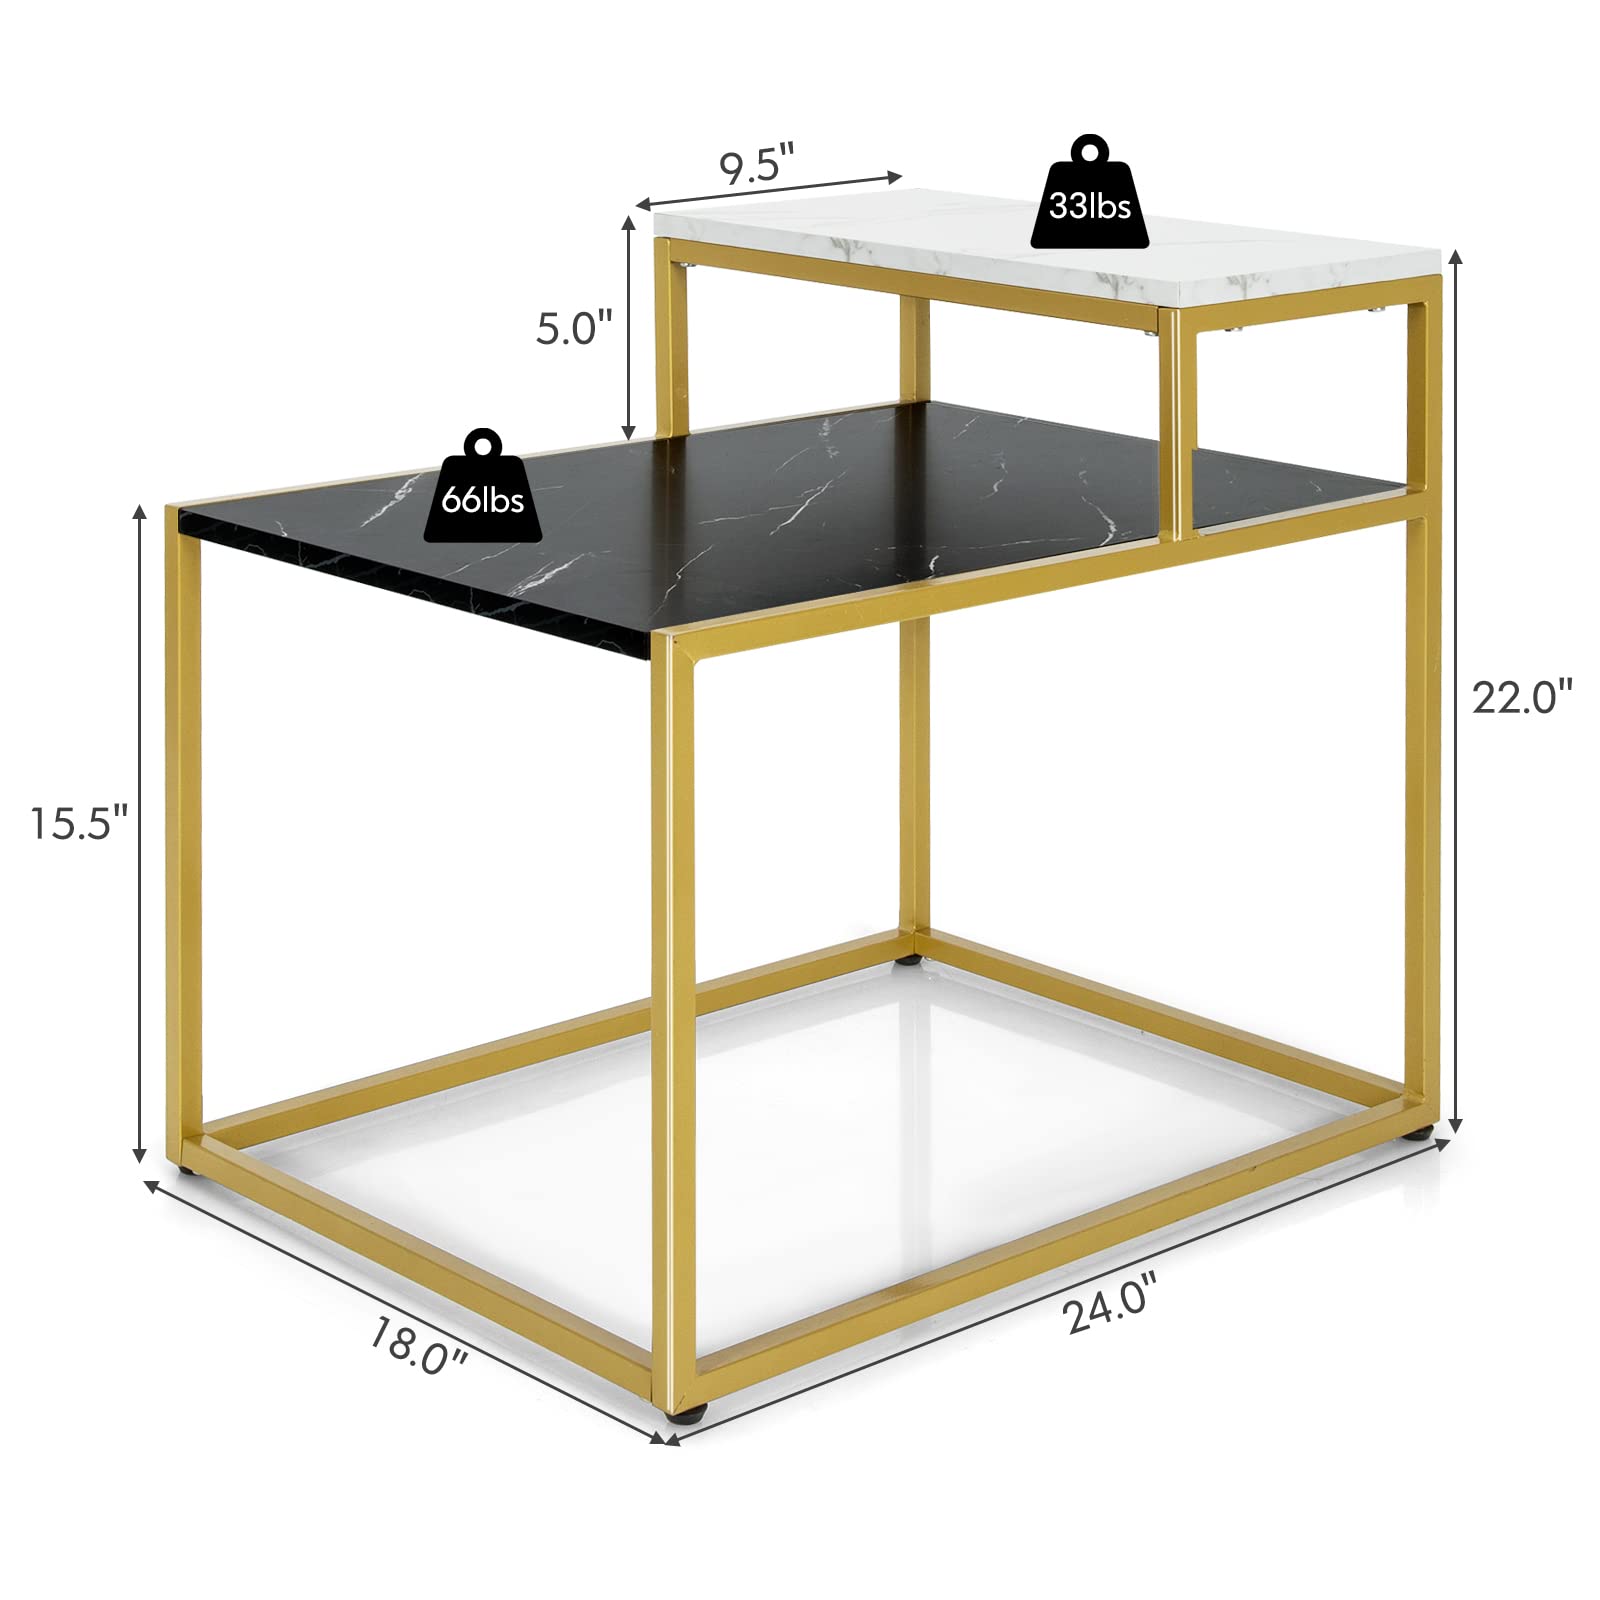 Giantex End Table, Nightstand w/Storage Shelf, 2-Tier Side Table w/Metal Frame